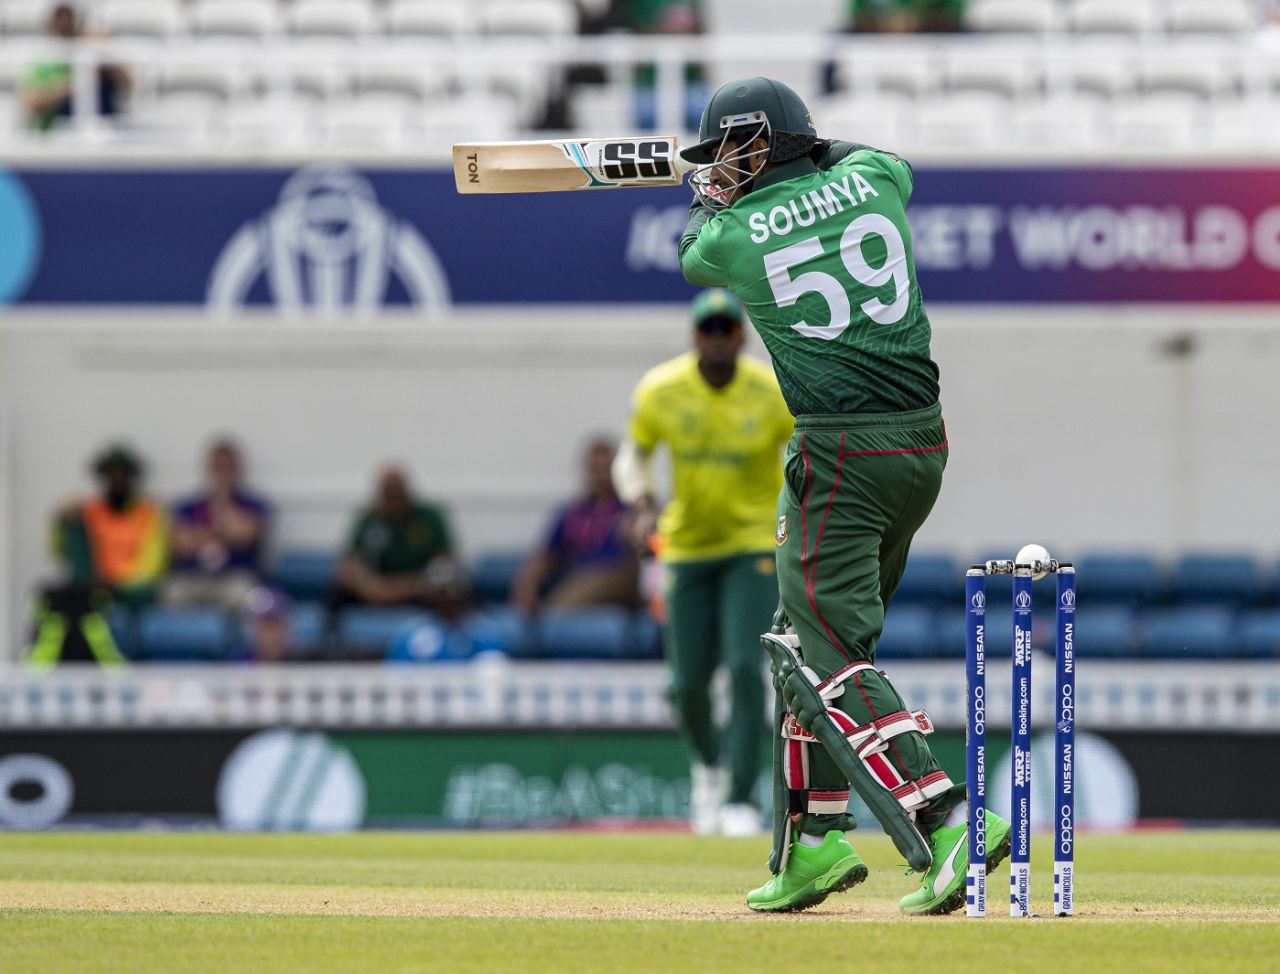 Soumya Sarkar of Bangladesh survives a near miss , Bangladesh vs South Africa, World Cup 2019, The Oval, June 2, 2019